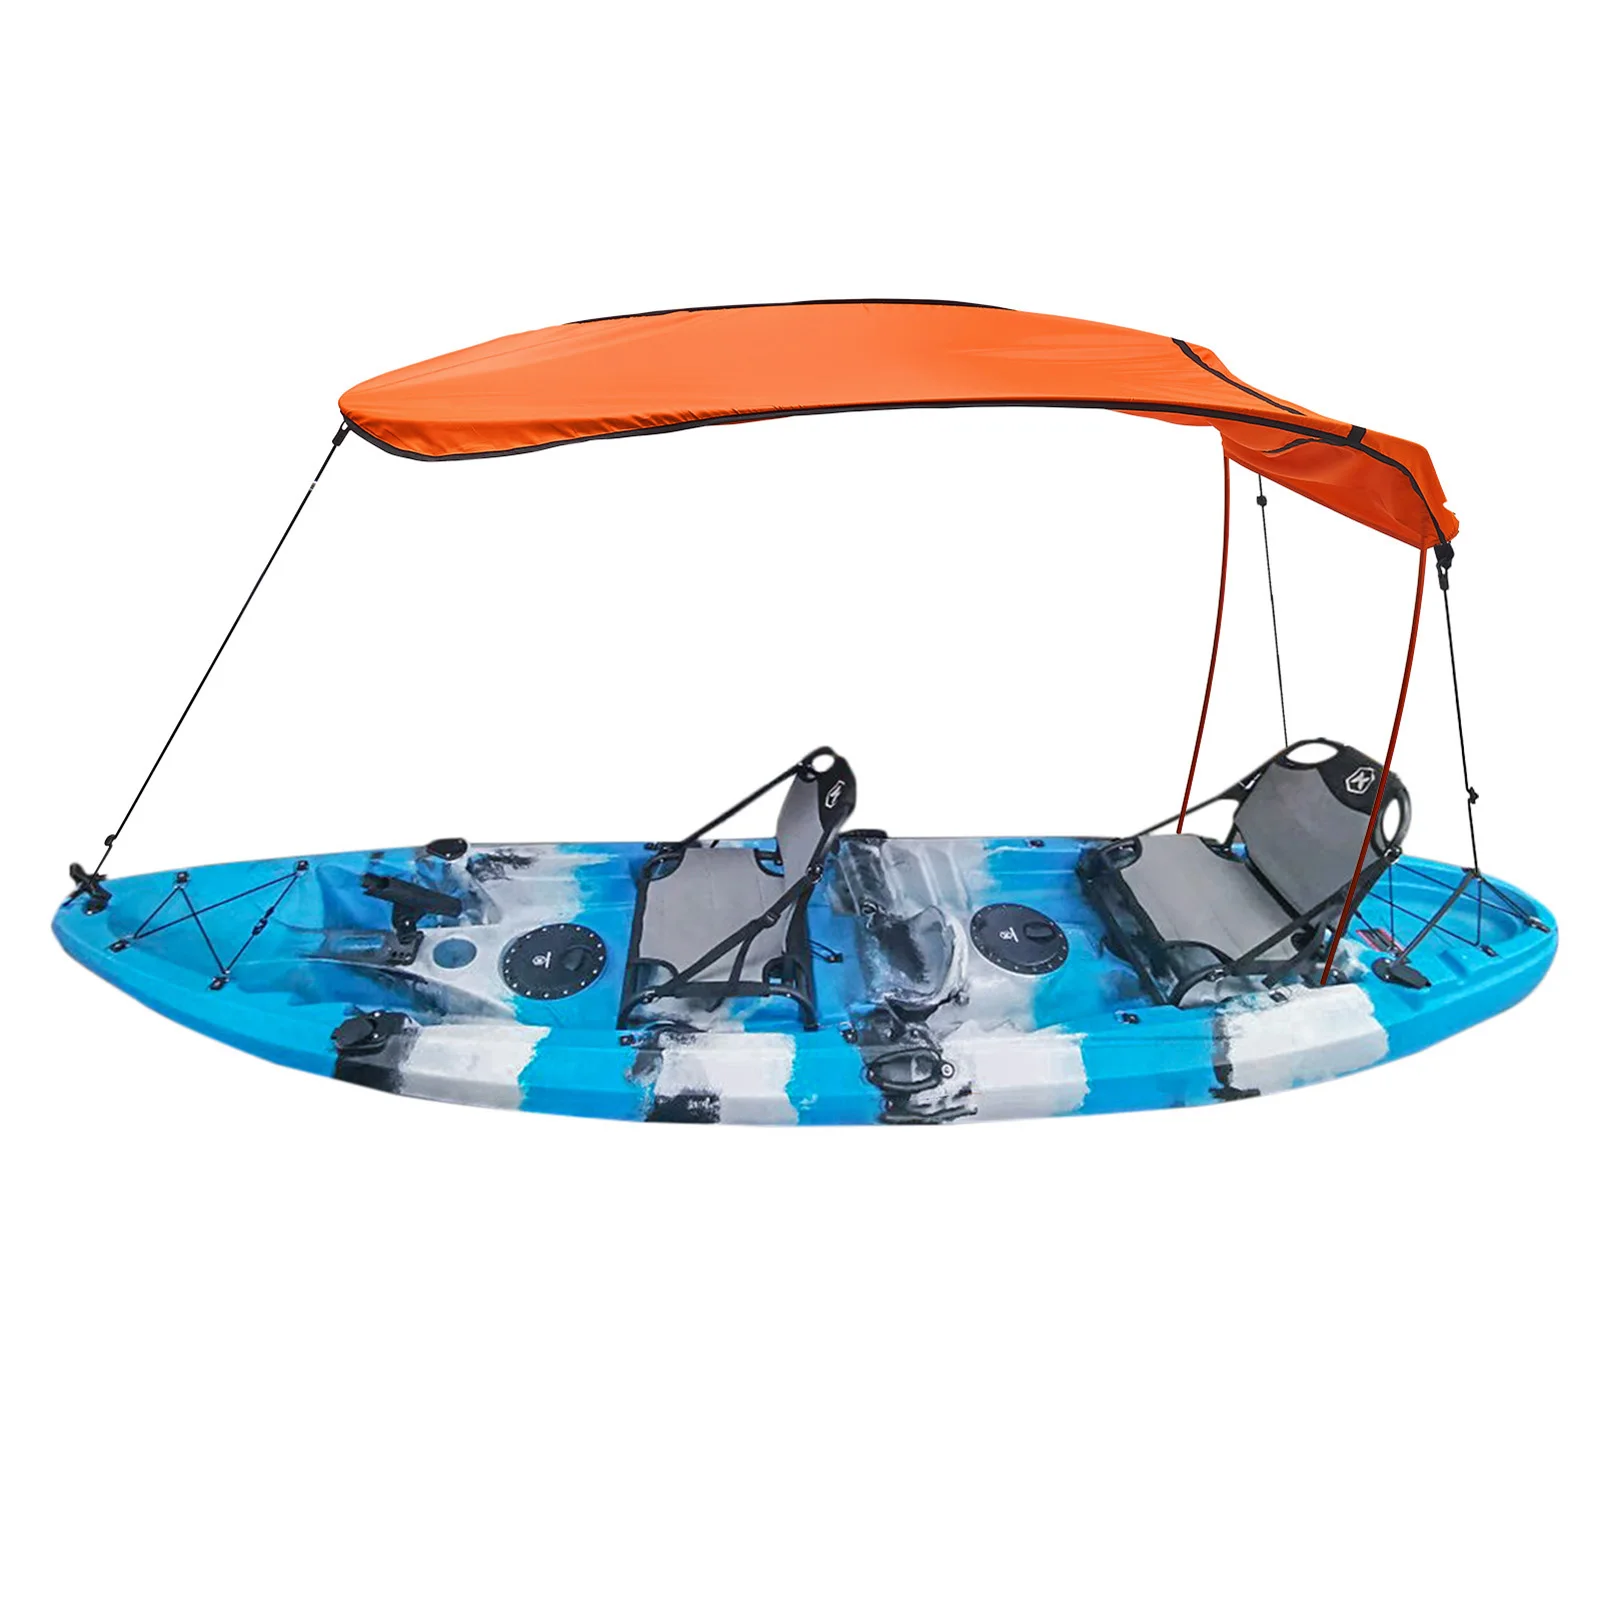 https://ae01.alicdn.com/kf/Sae4ca31c0f164ce2b263fb94c895e557G/Toldo-impermeable-para-Kayak-cubierta-superior-para-canoa-equipo-de-playa-accesorios-para-Kayak.jpg